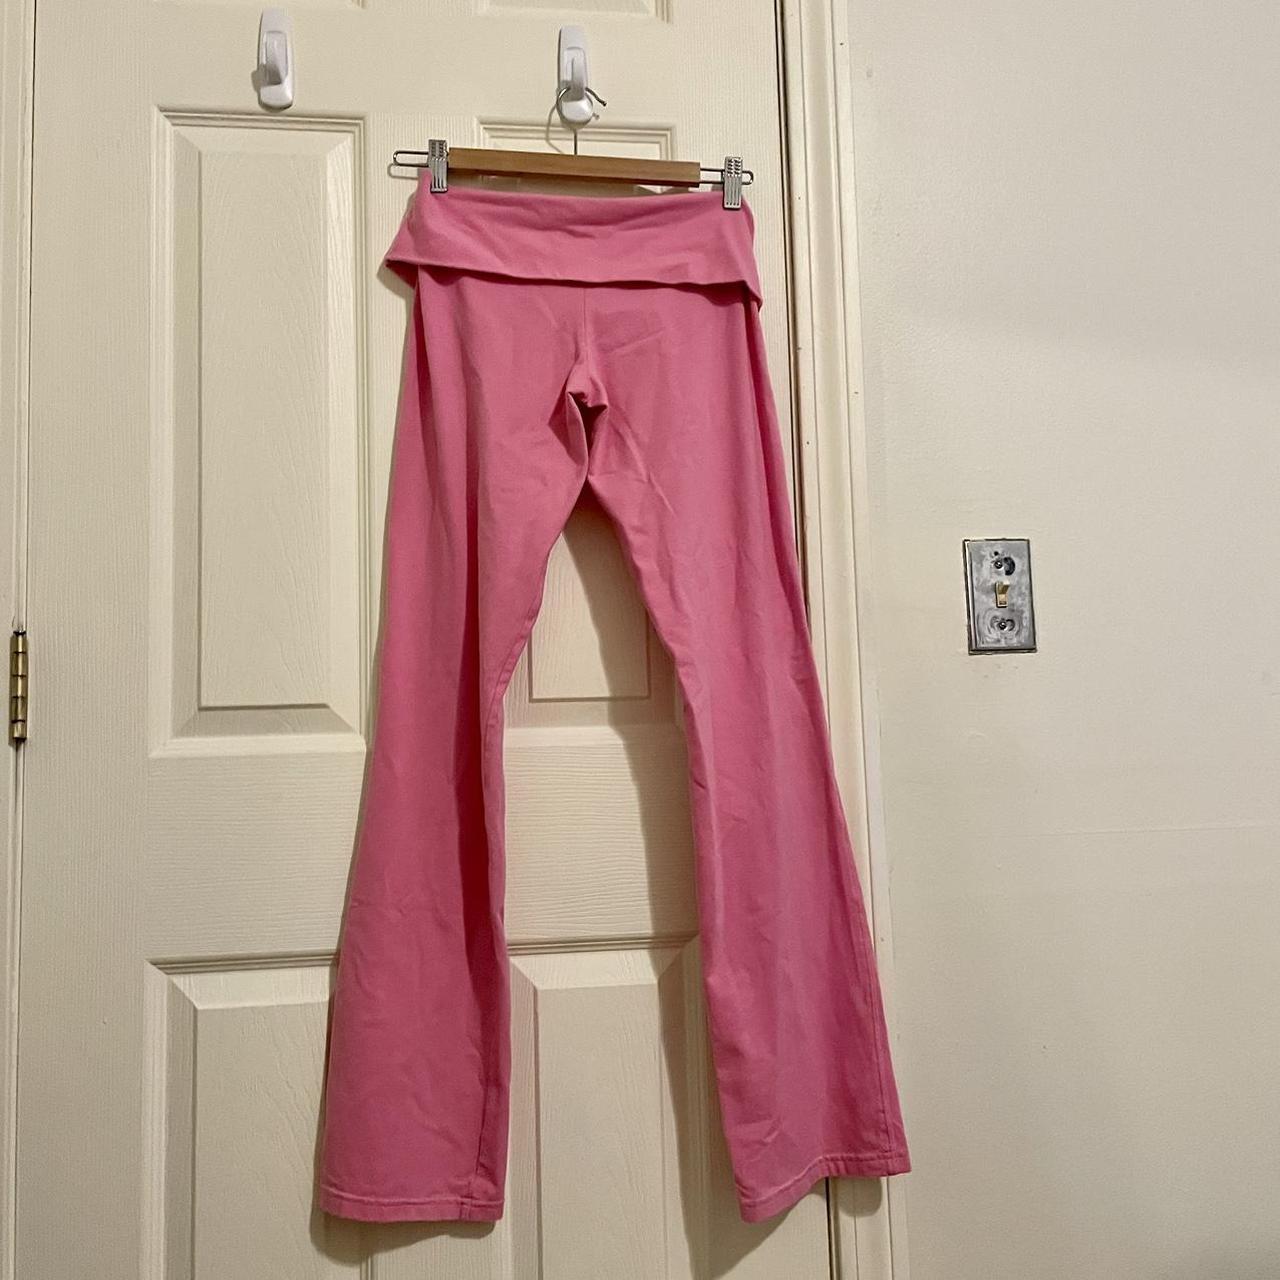 Victoria's Secret Pink Fold-over Yoga Pants